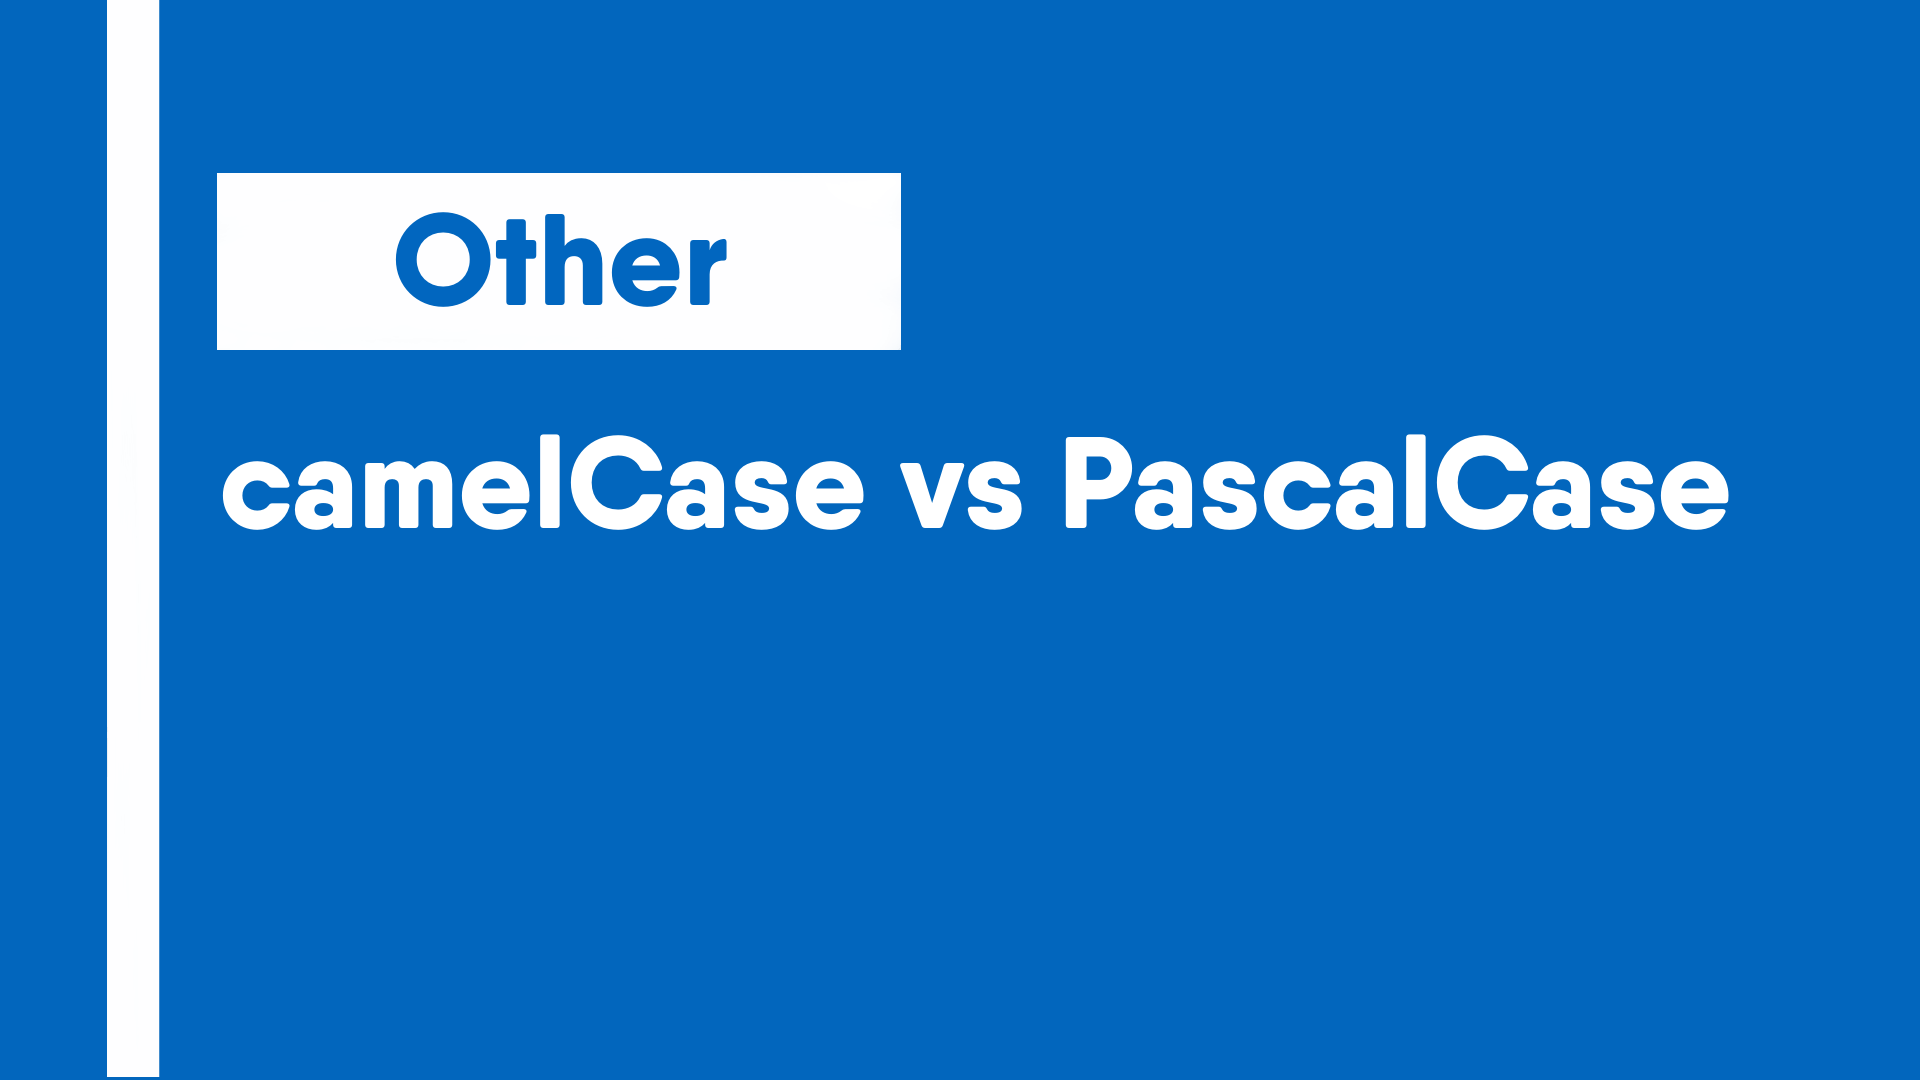 camelCase vs PascalCase